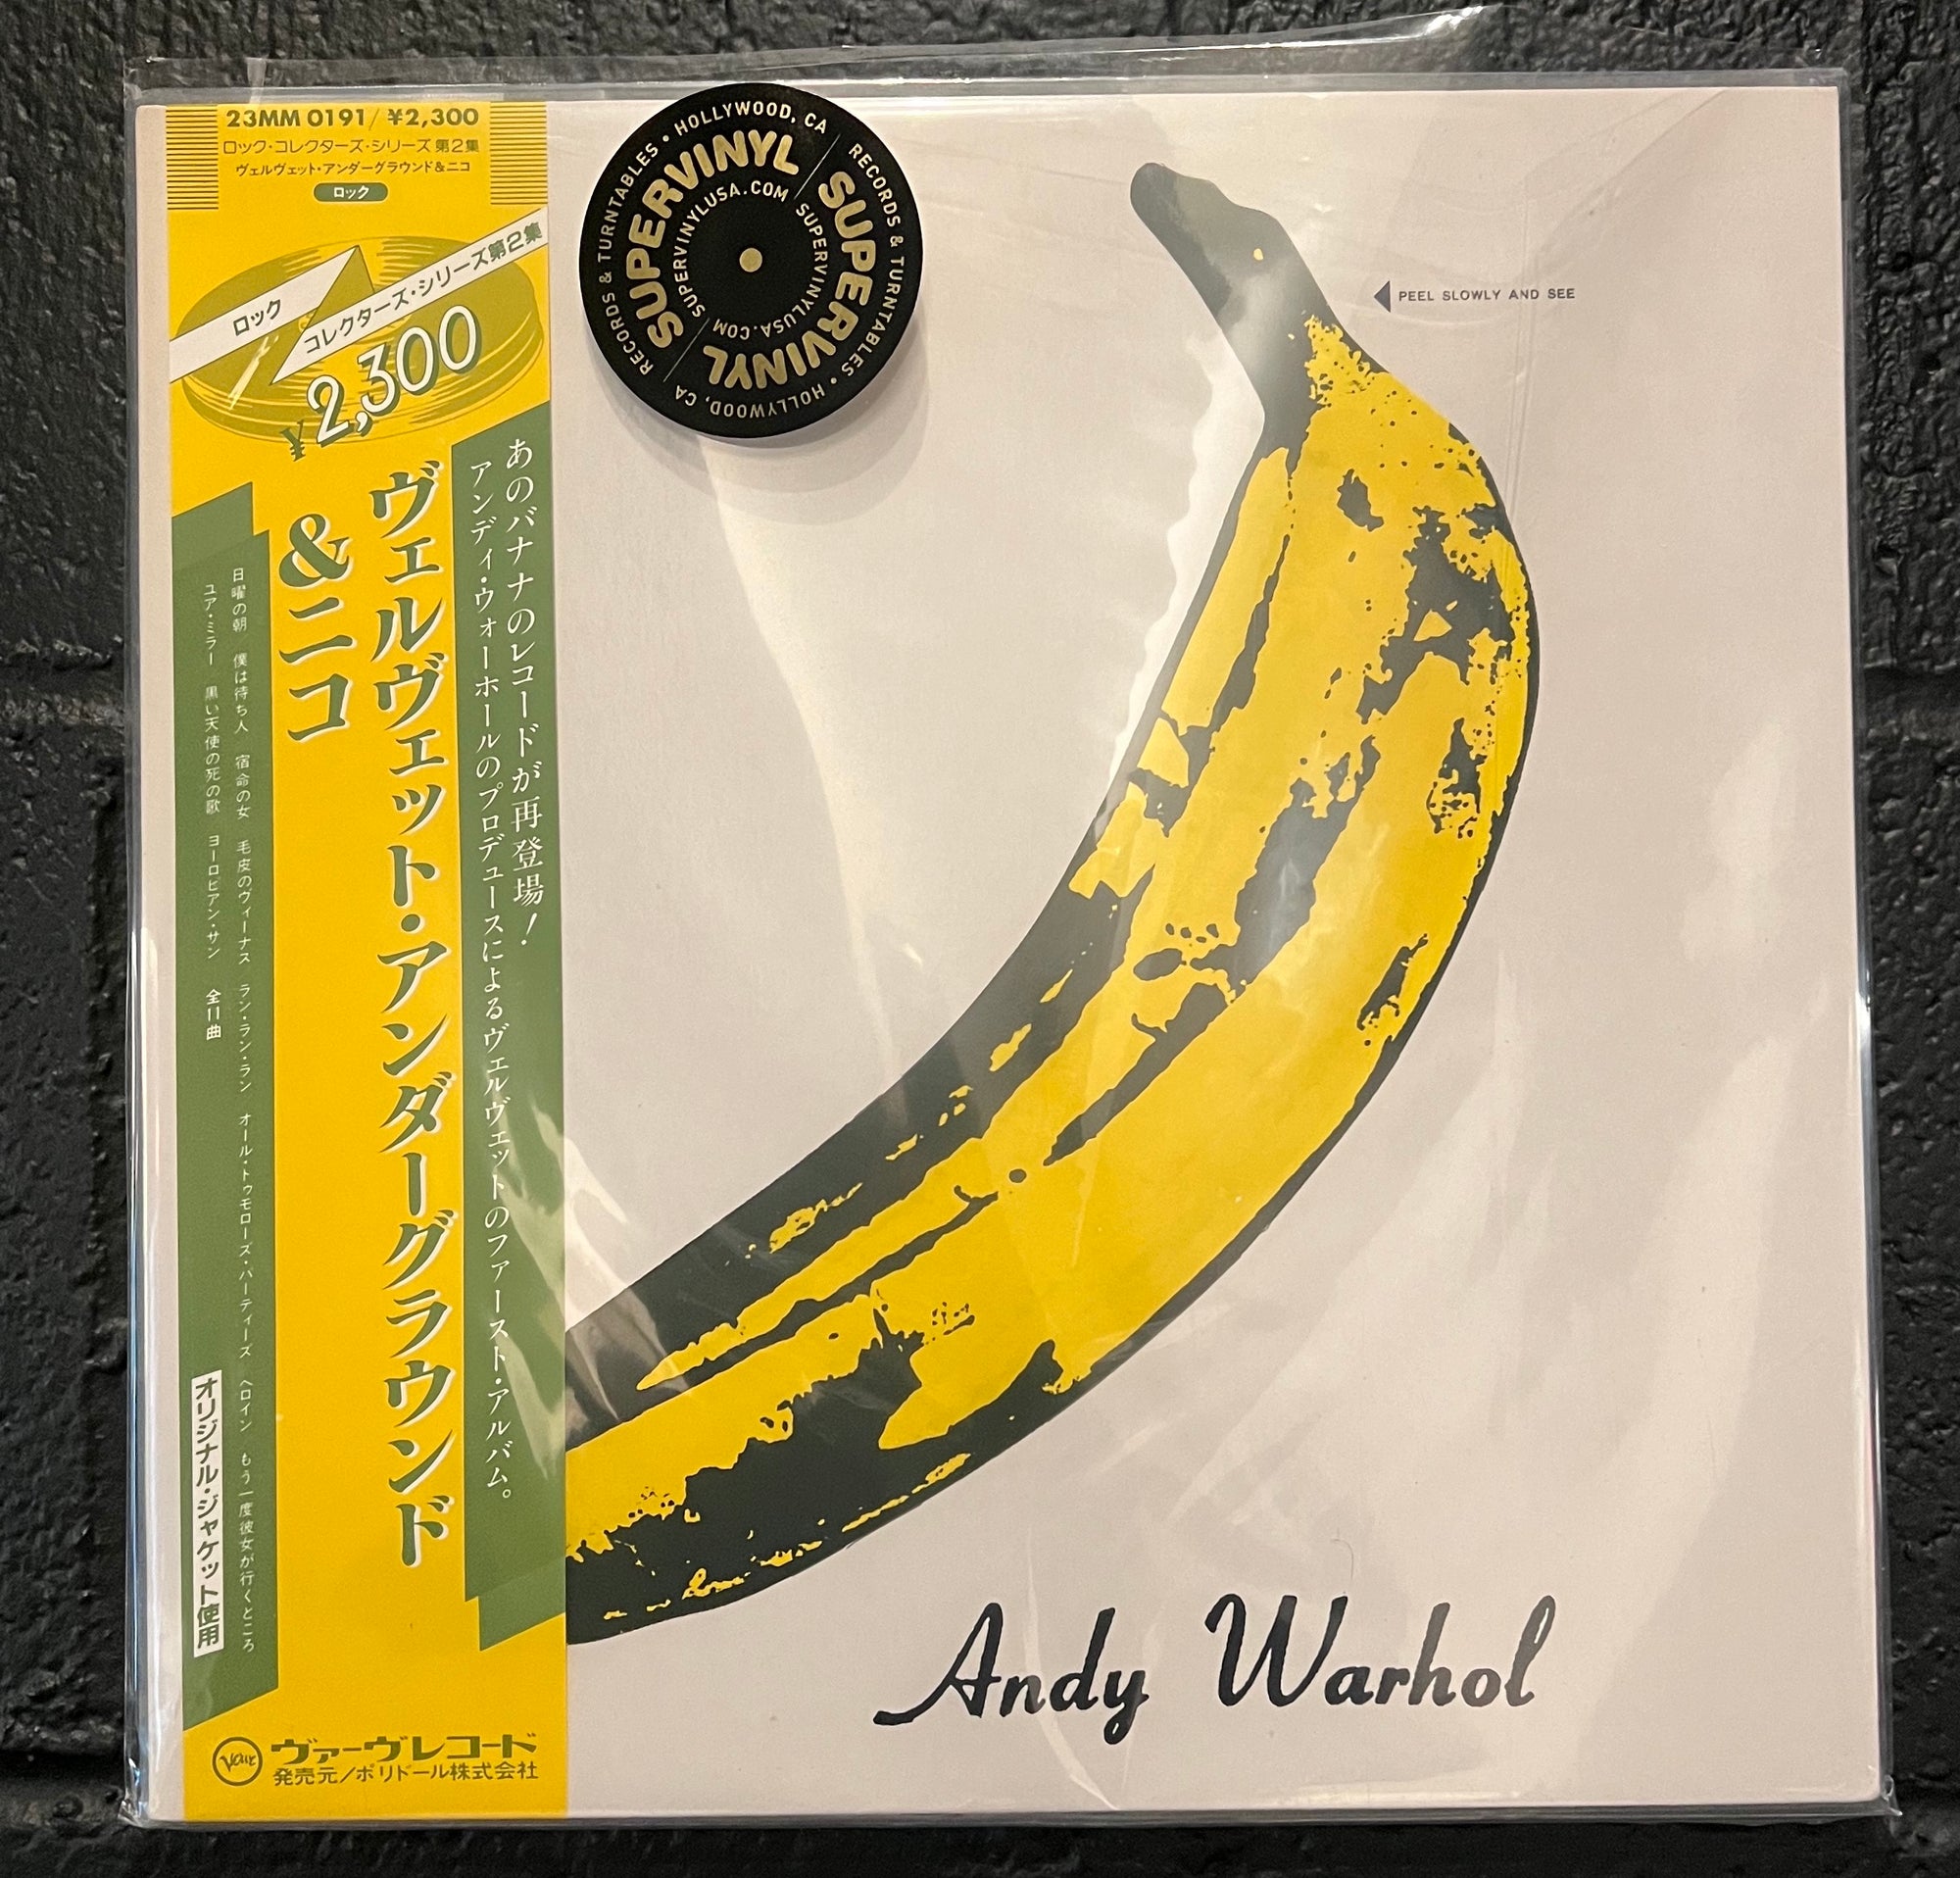 The Velvet Underground & Nico (Japan LP w/ obi)